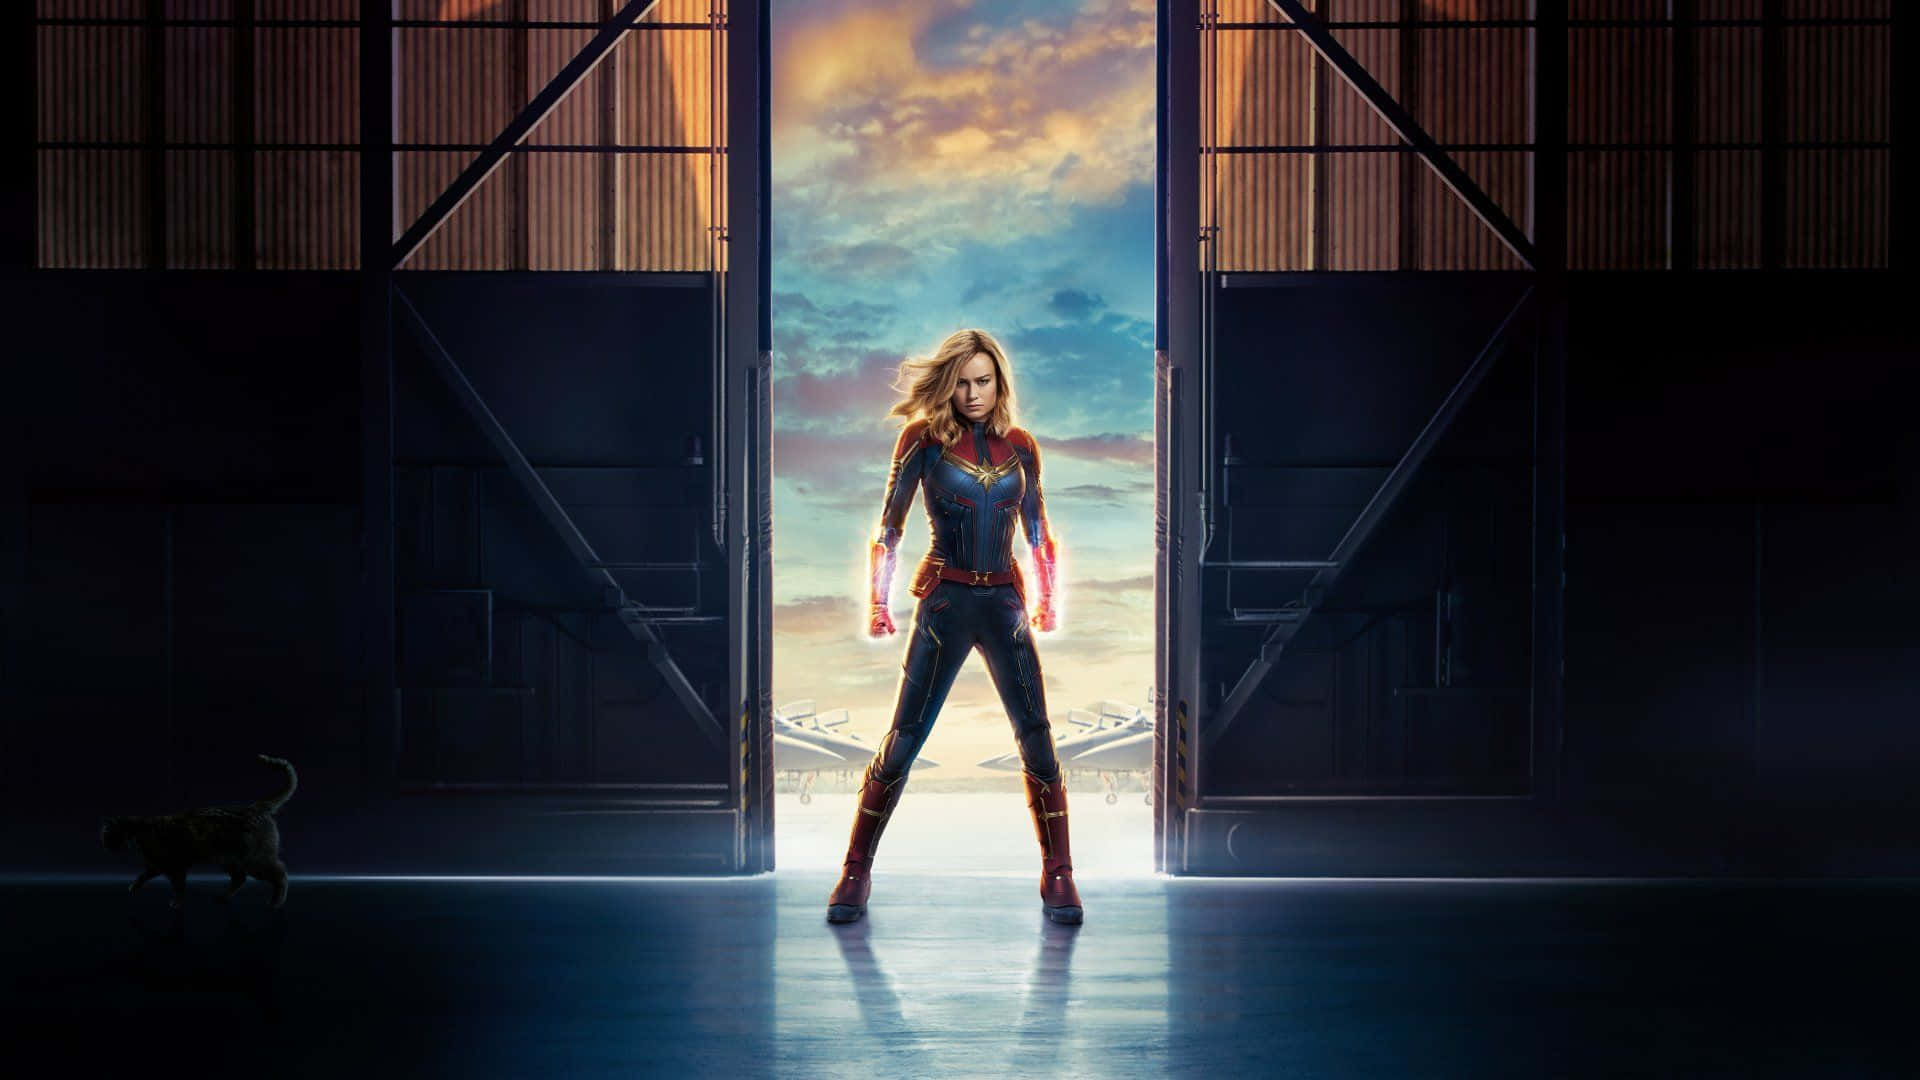 “Fight like a girl!” - Brie Larson as Carol Danvers, a.k.a Captain Marvel. Wallpaper